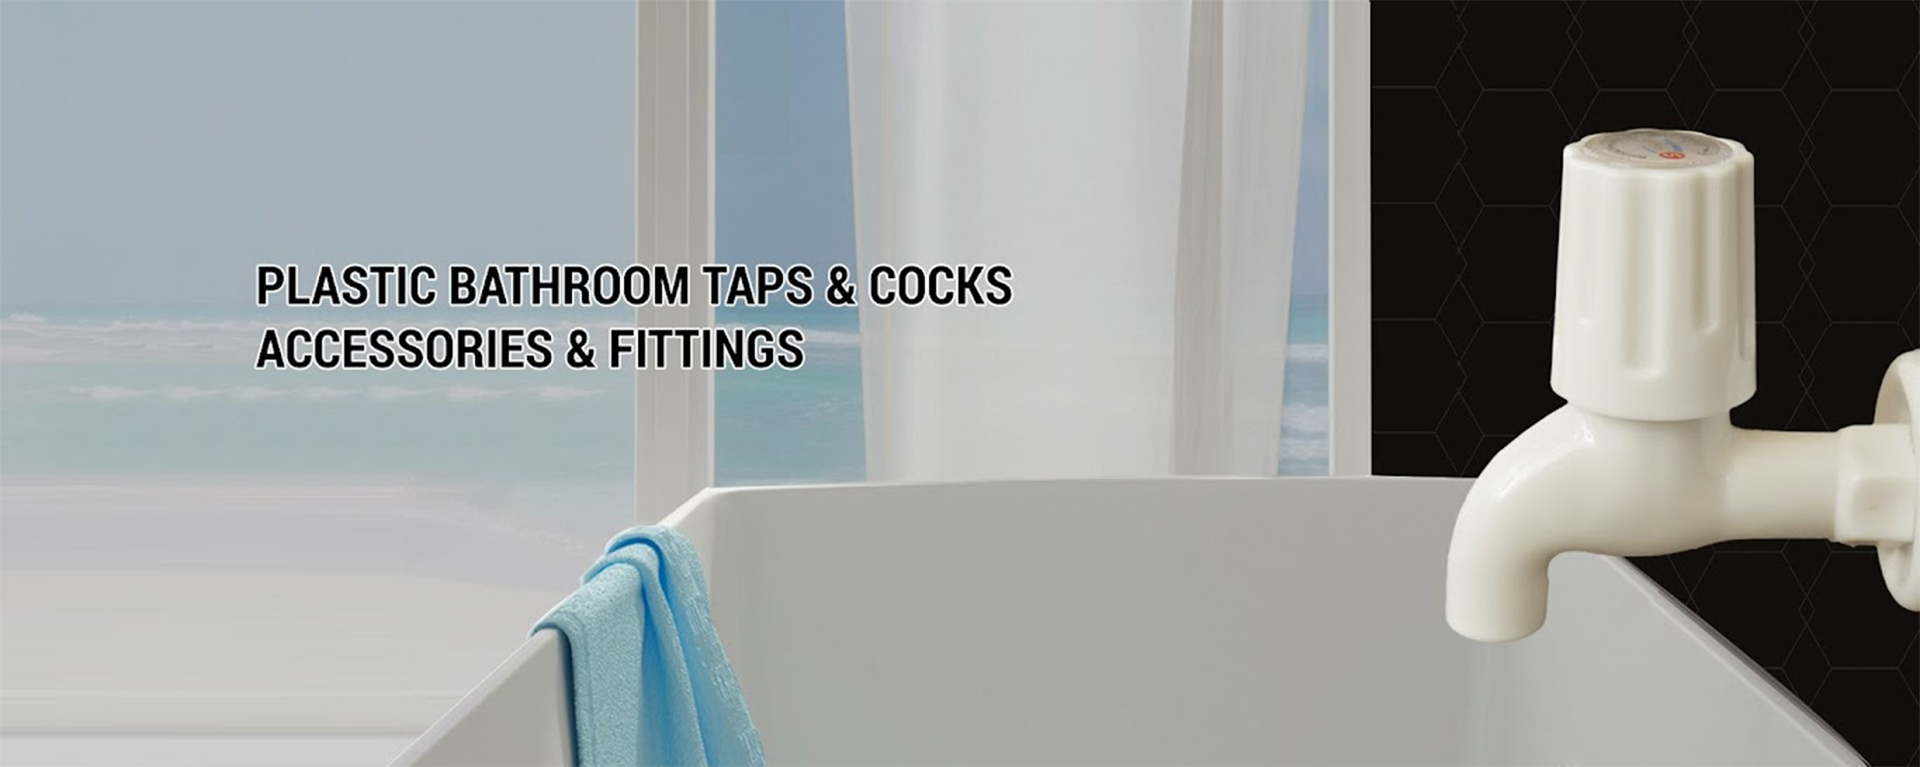 Plastic Bathroom Taps & Cocks Accessories & Fitting